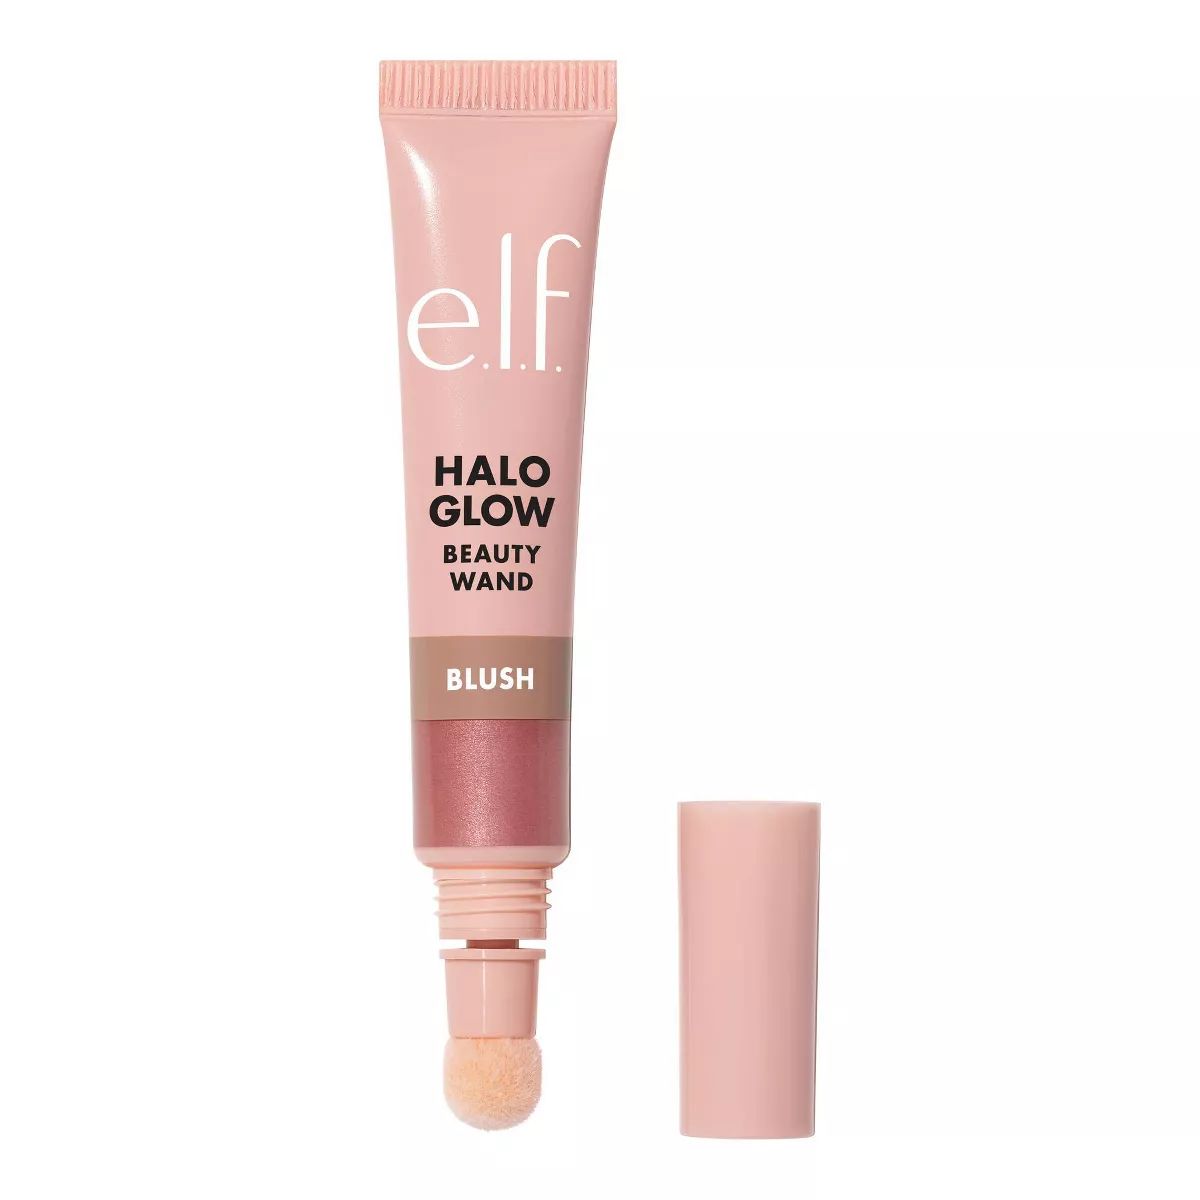 e.l.f. Halo Glow Blush Beauty Wand - 0.33 fl oz | Target